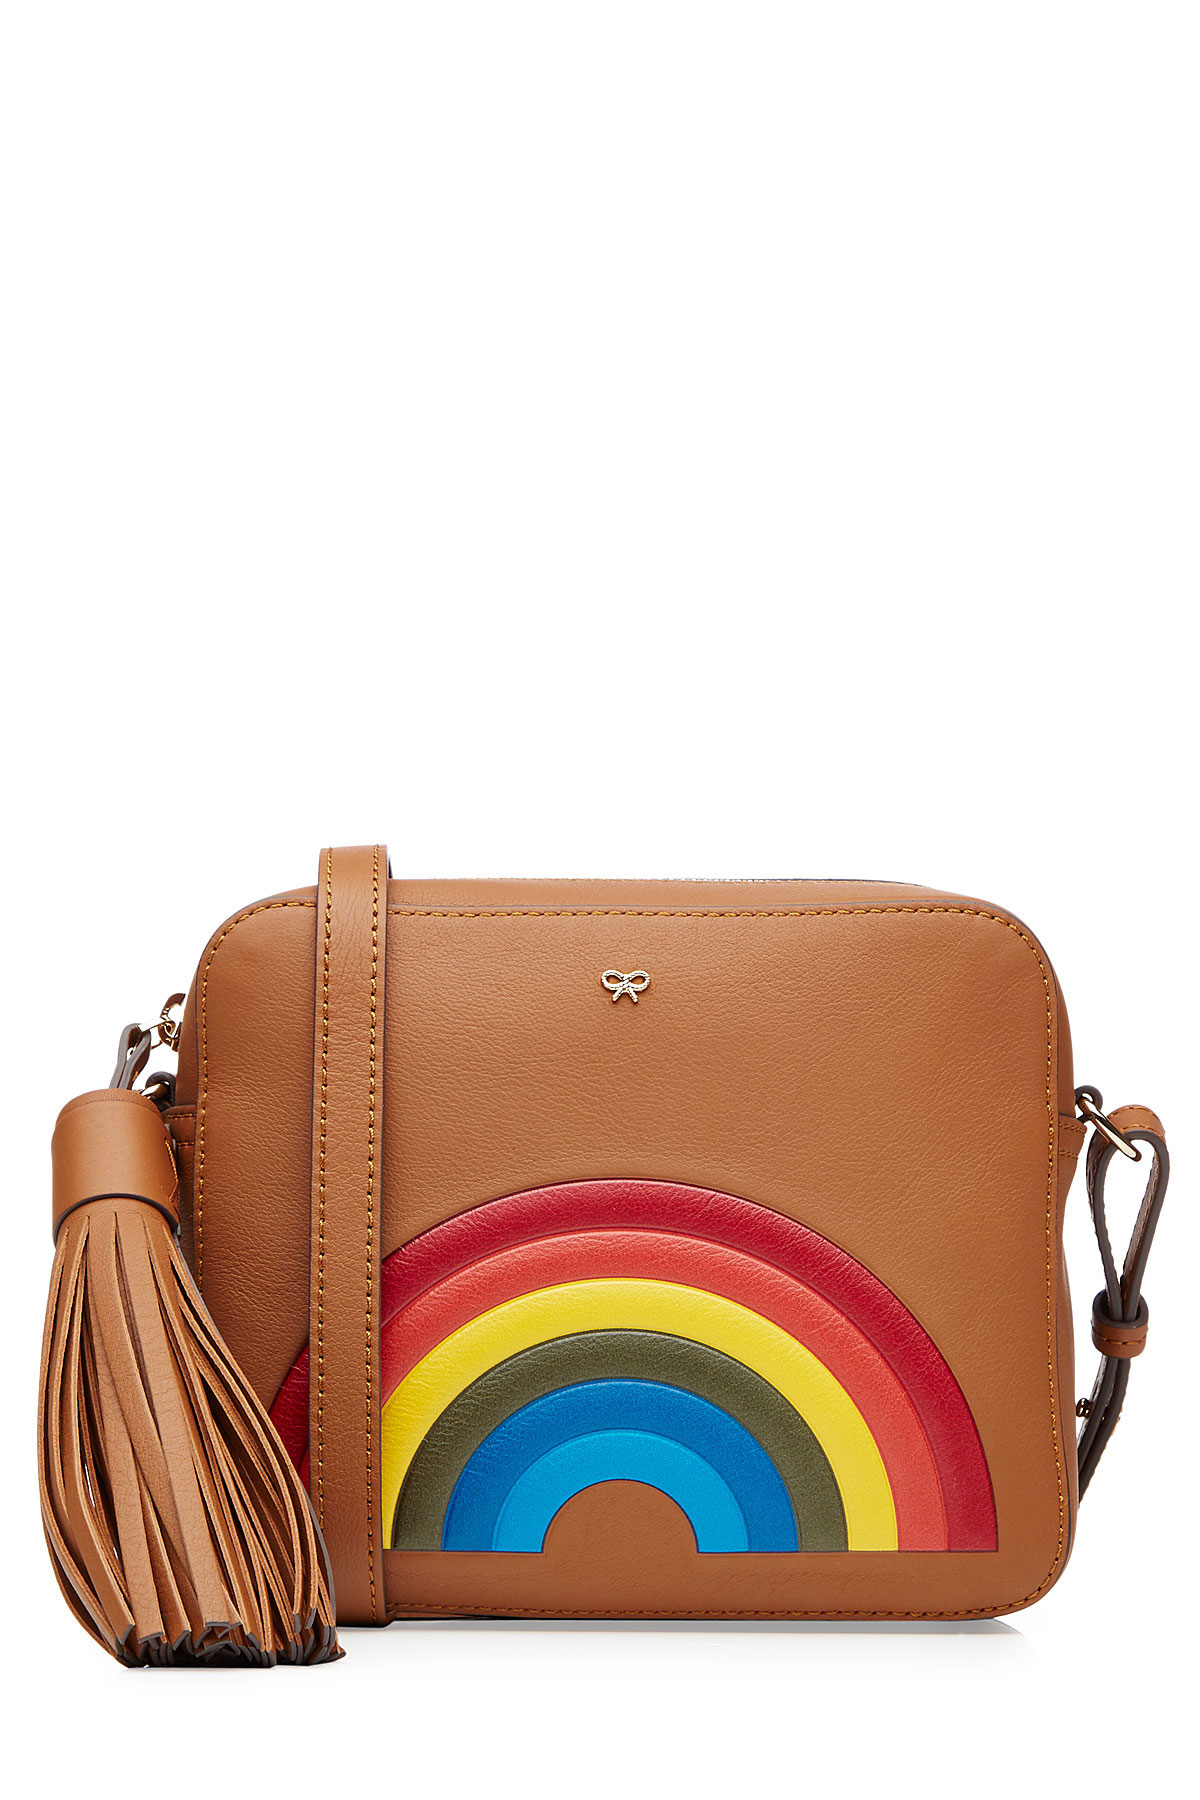 Anya hindmarch Rainbow Cross Body Bag in Brown | Lyst